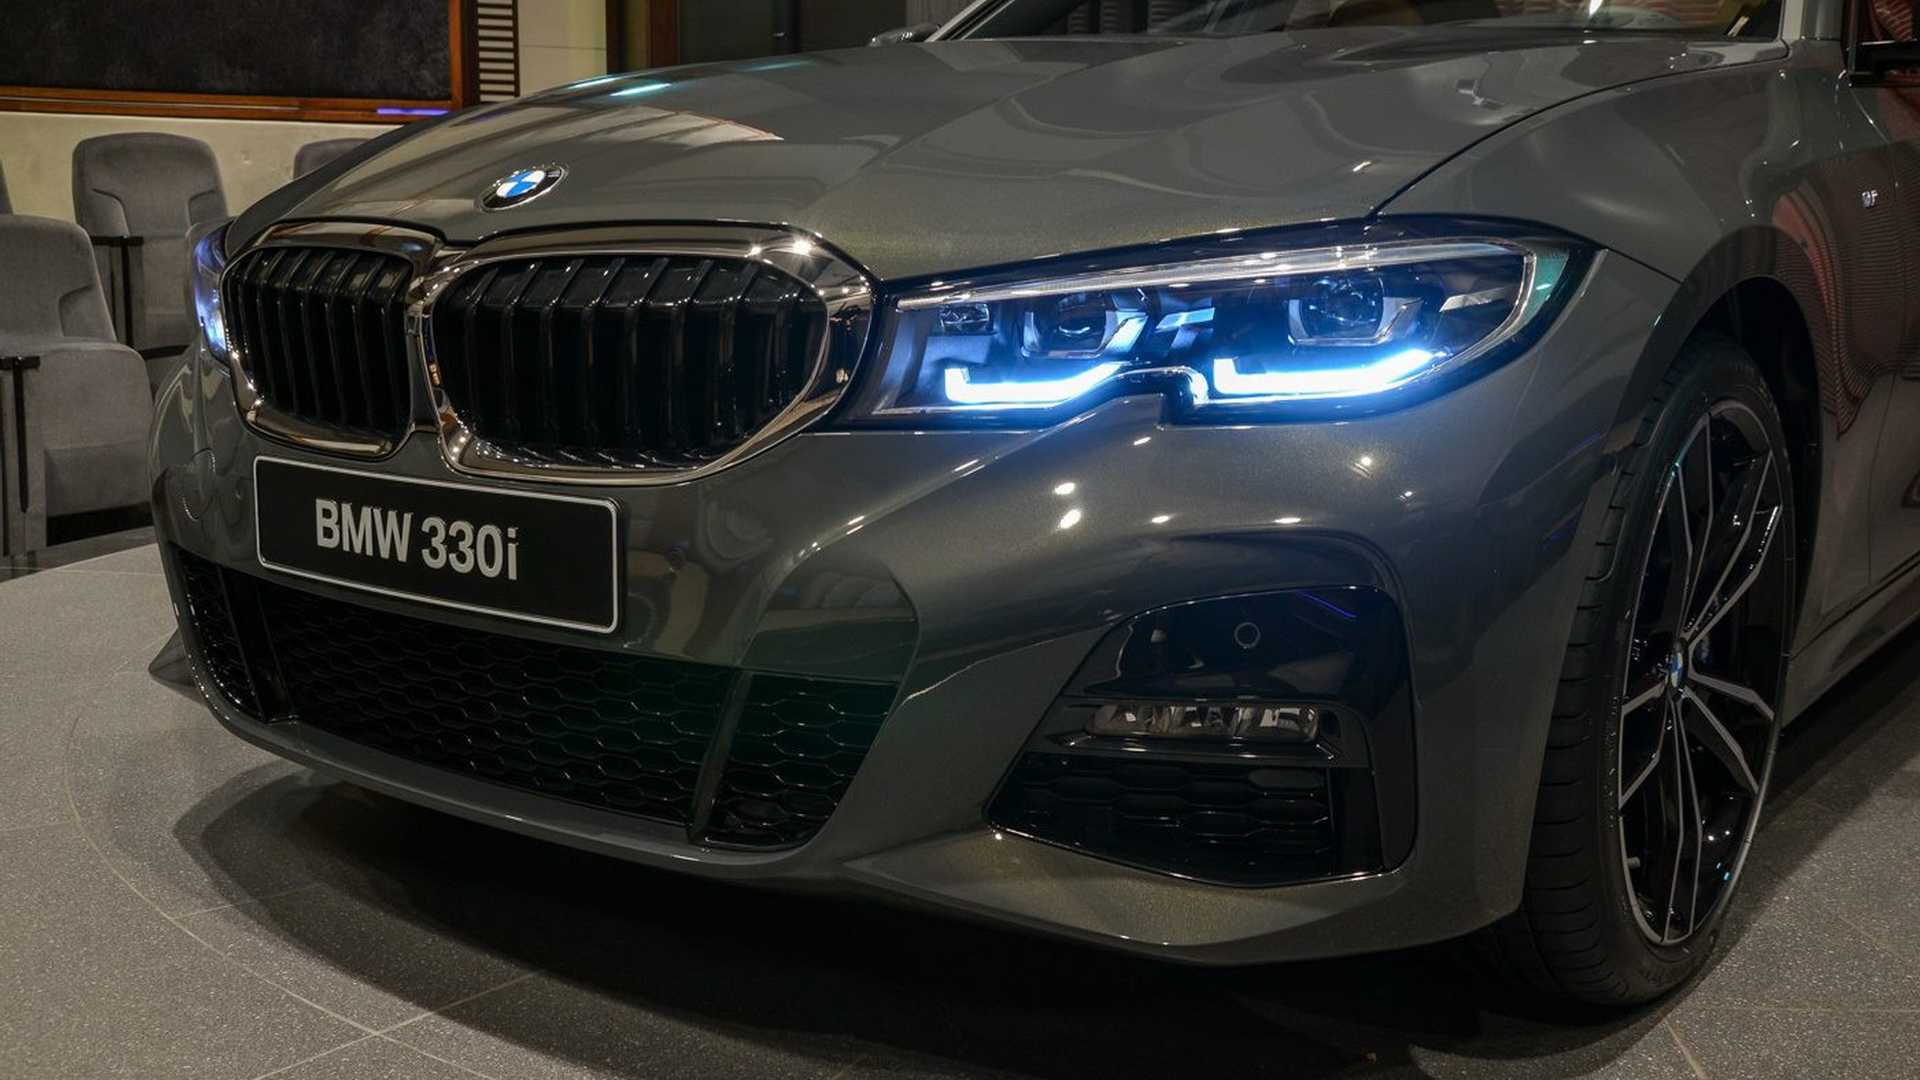 2019 BMW 3 Series in Dravite Grey Metallic Individual color